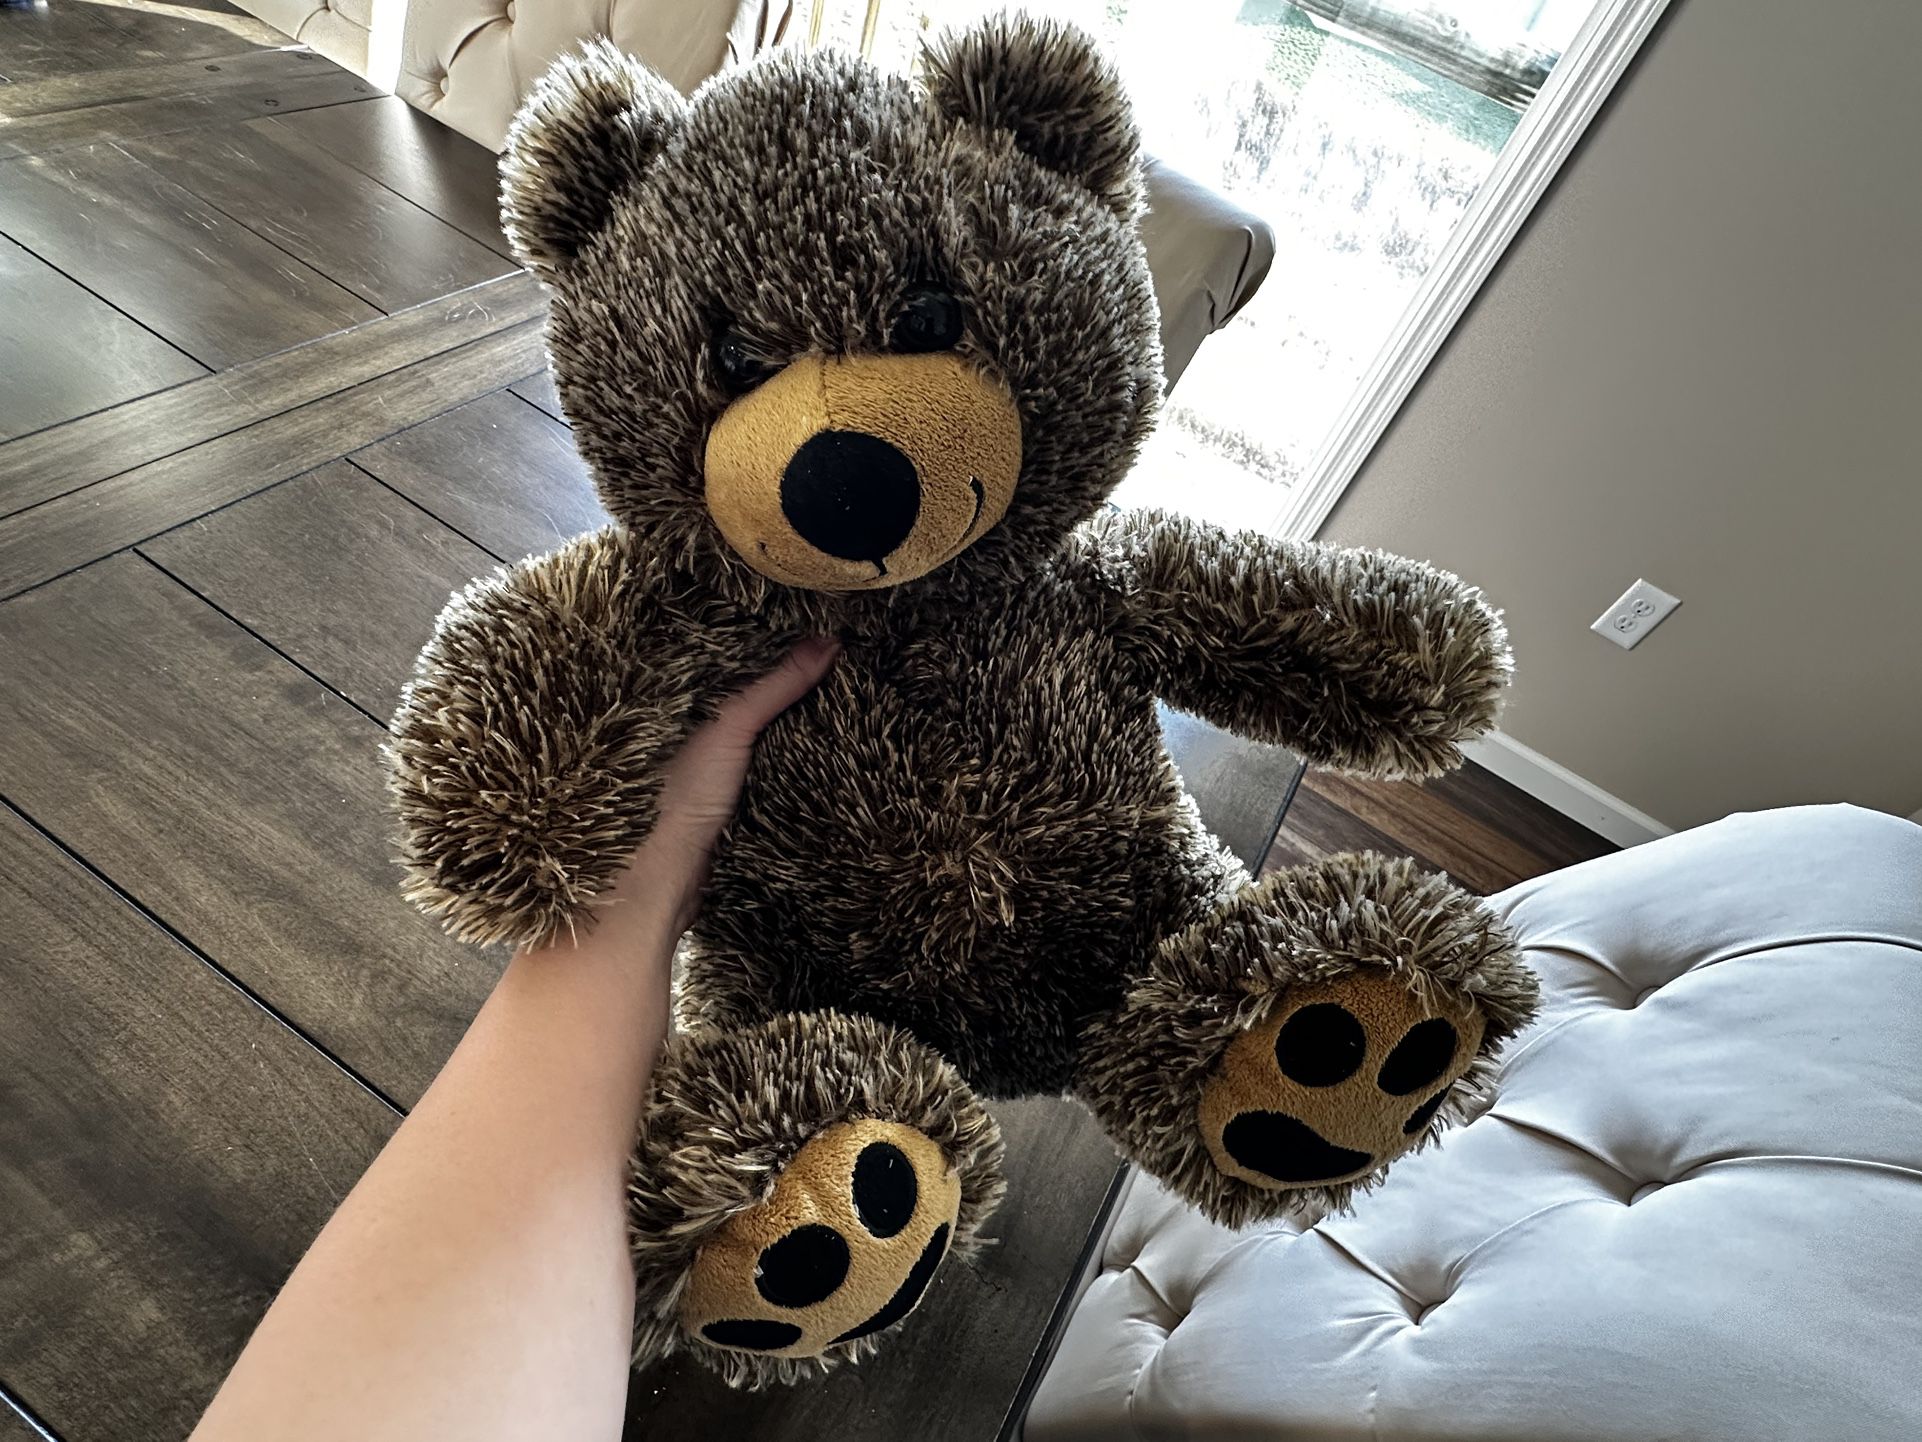 Teddy Bear Stuffed Animal 